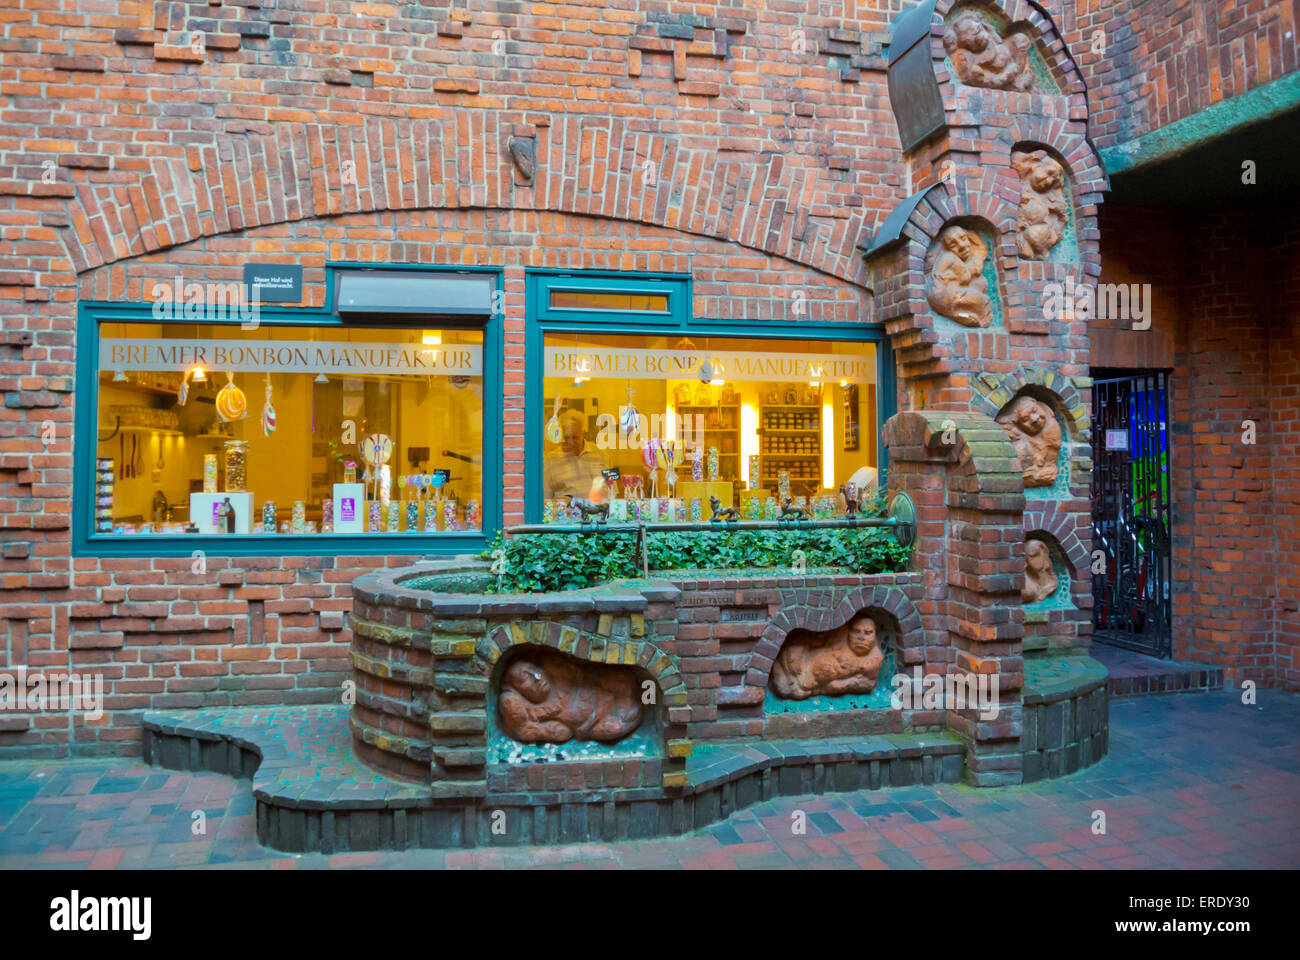 Candy store, sweet shop, exterior, courtyard, Böttcherstrasse street, Altstadt, old town, Bremen, Germany Stock Photo